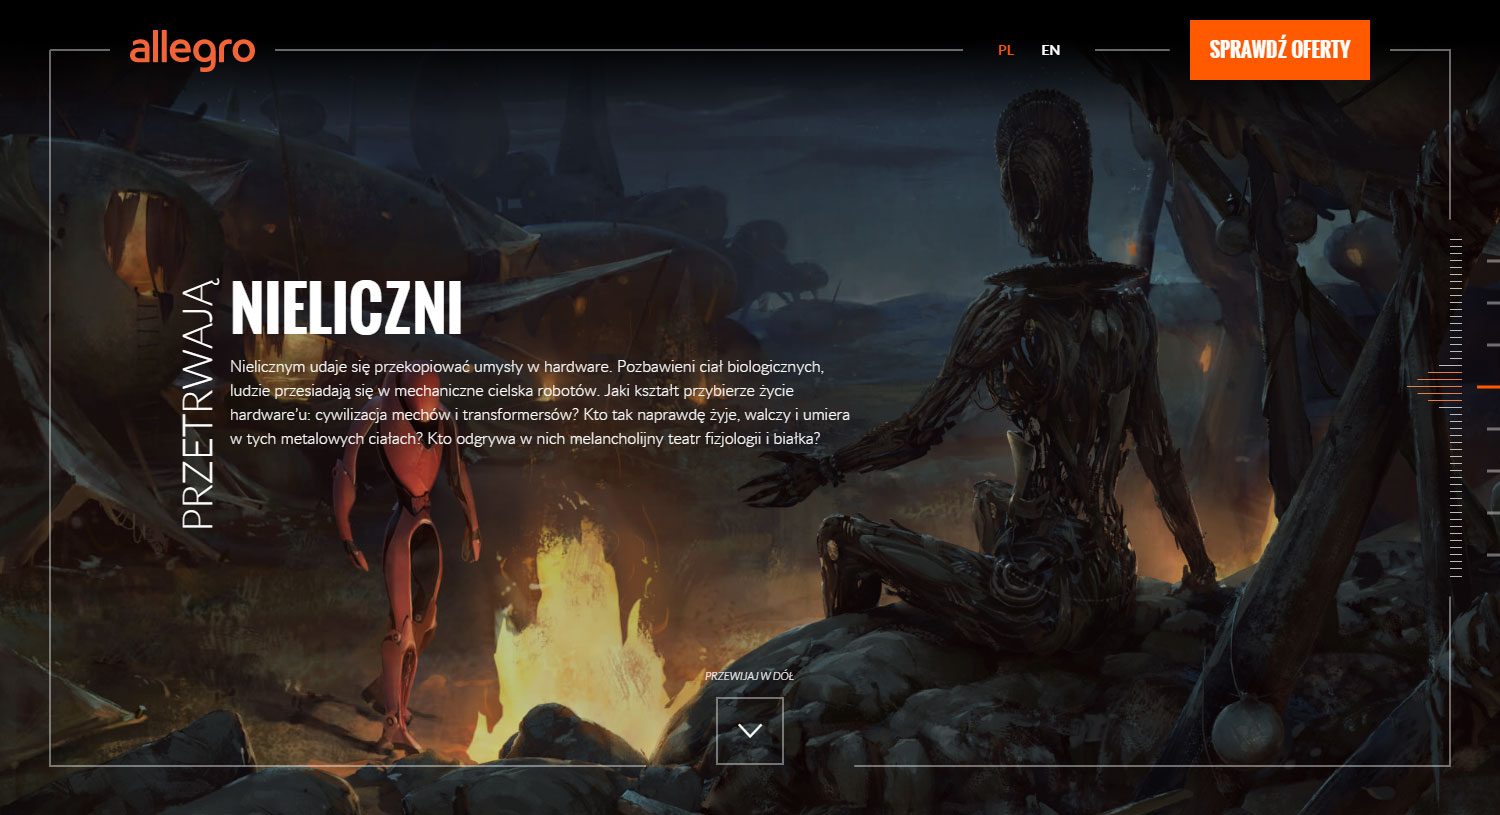 Dukaj. The Old Axolotl - Website of the Day